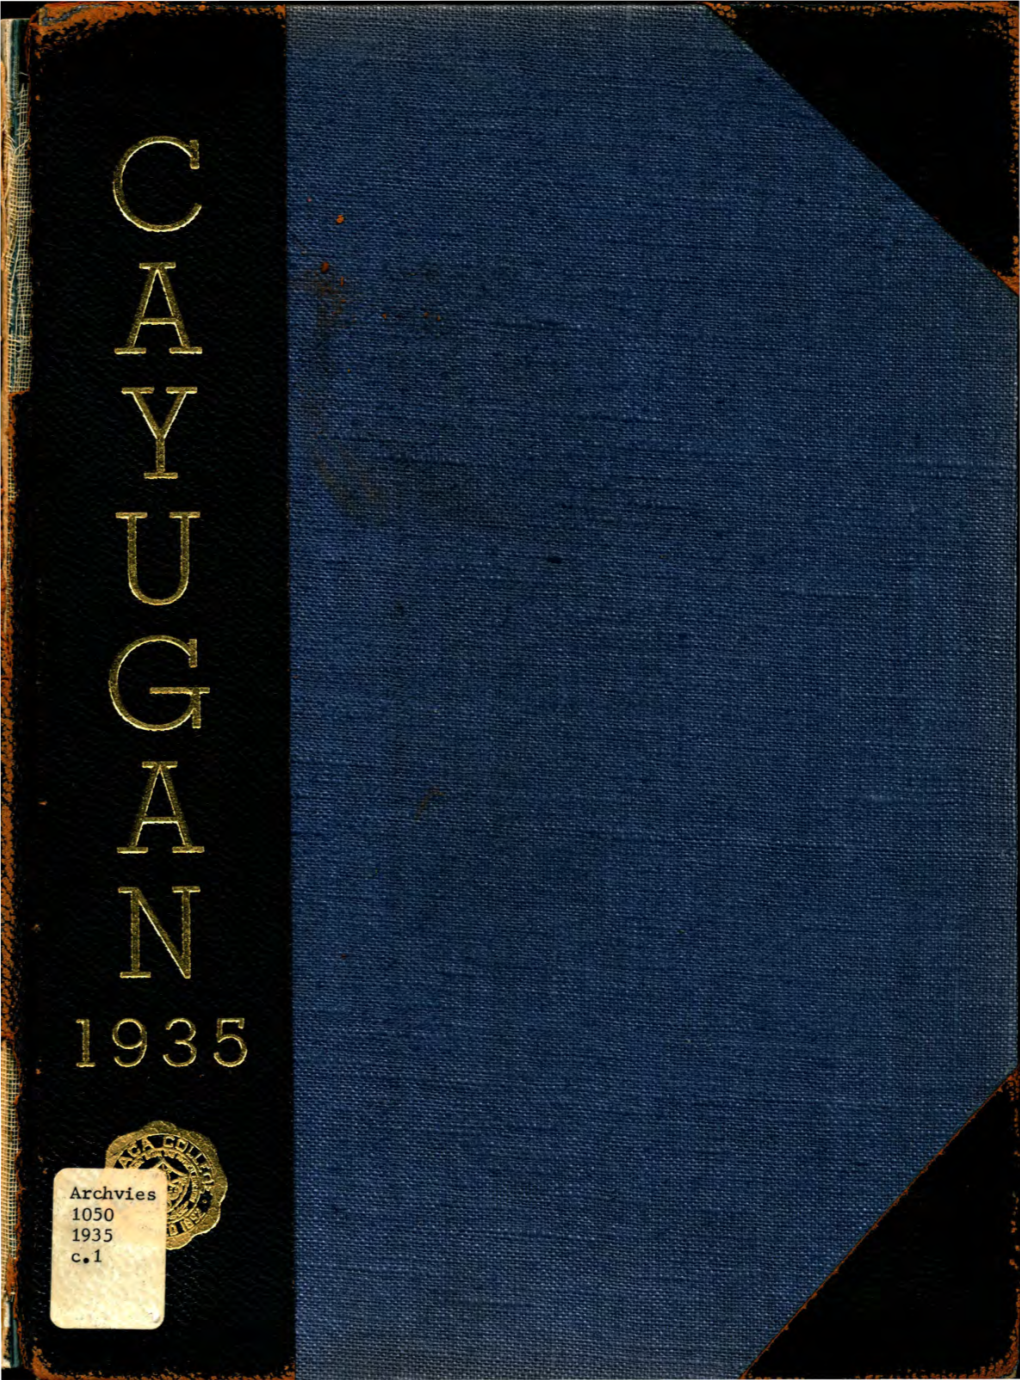 The Cayugan 1935